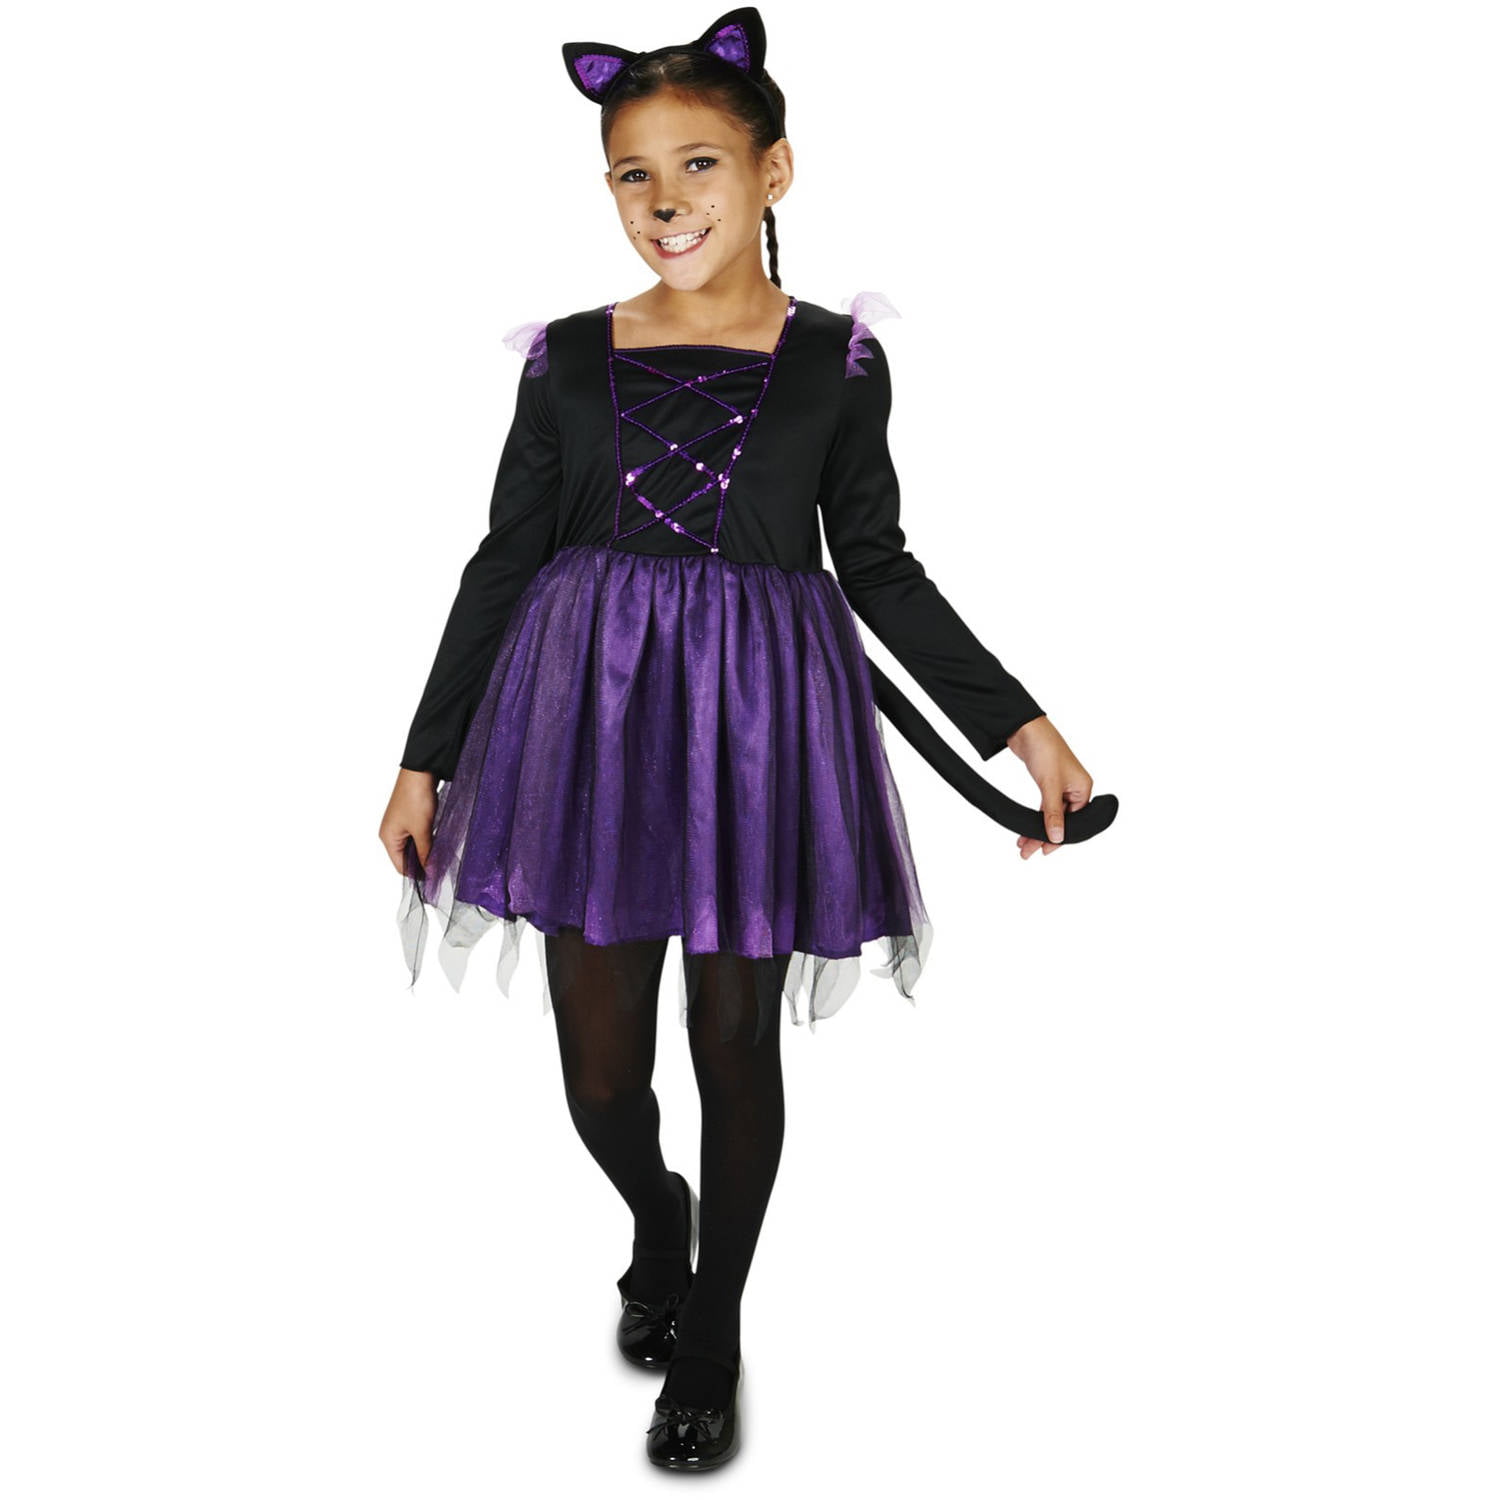 Dancing Kitty Child Halloween Costume - Walmart.com